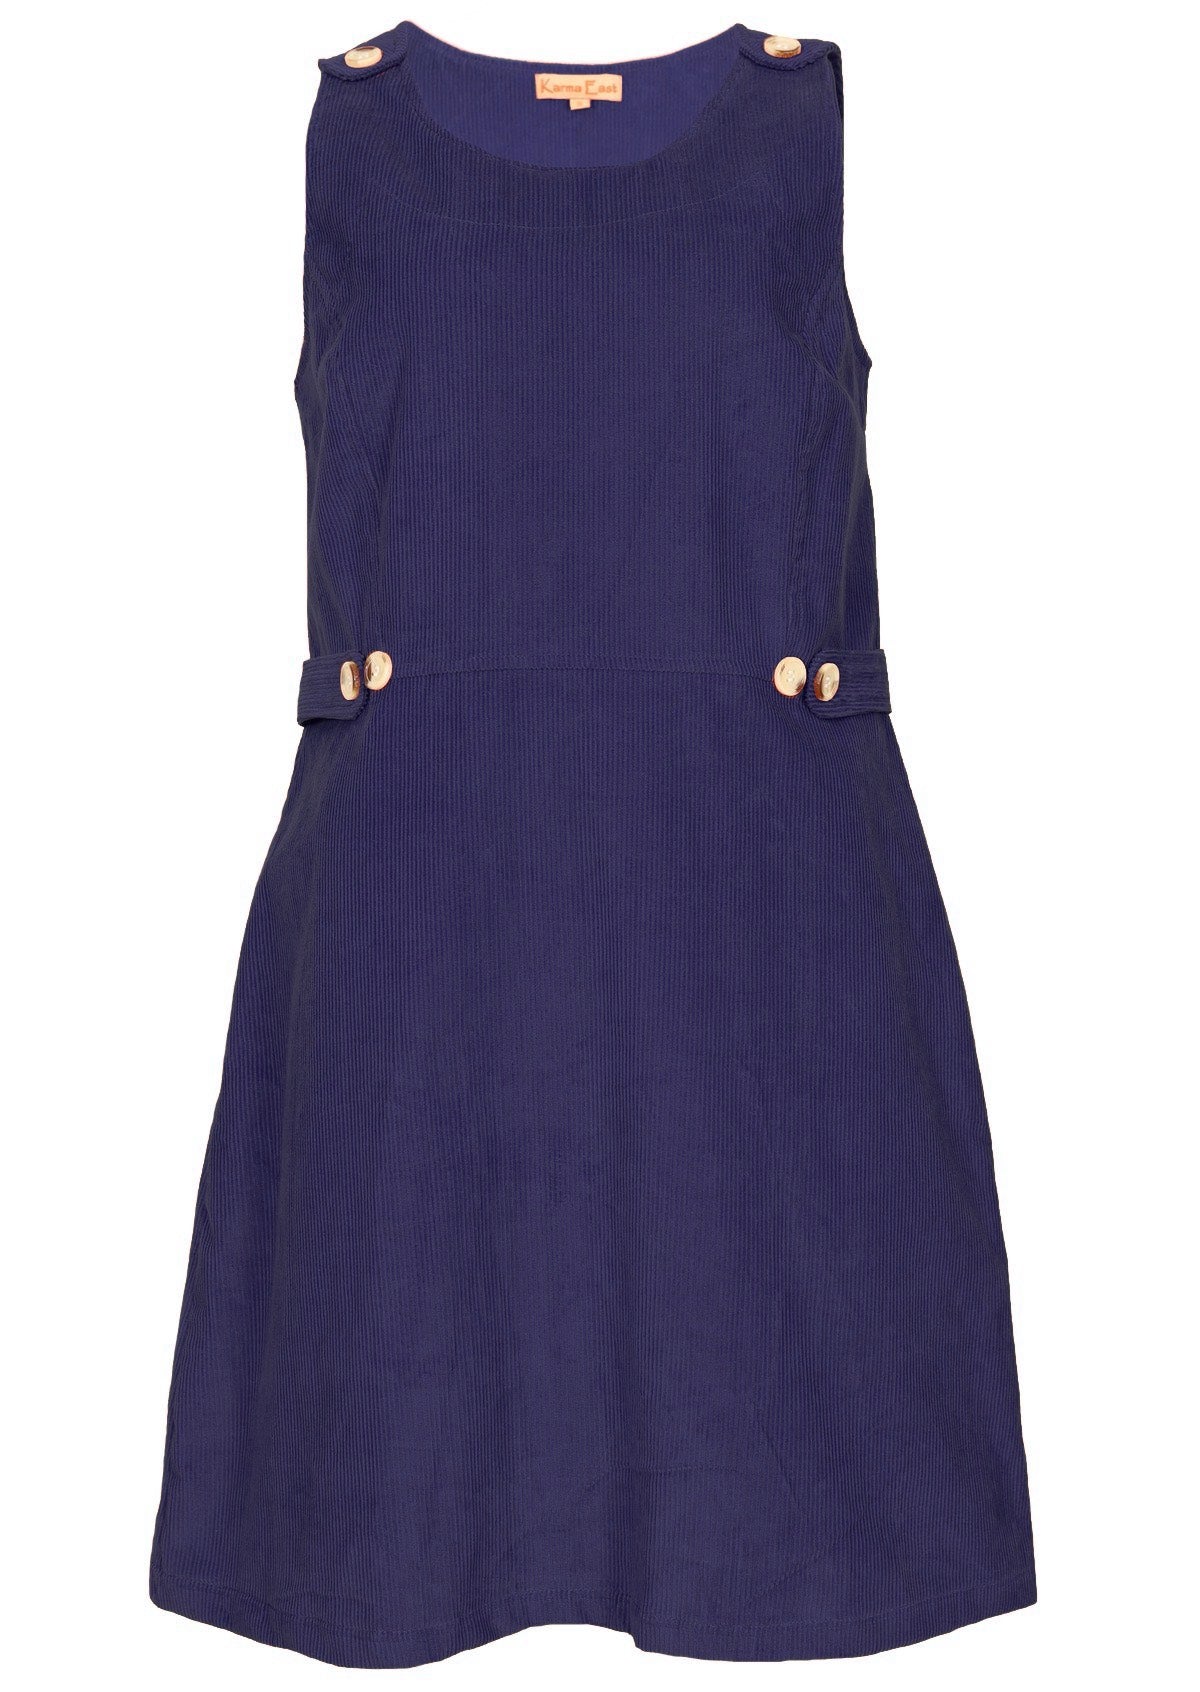 100% cotton corduroy dress designed in Australia